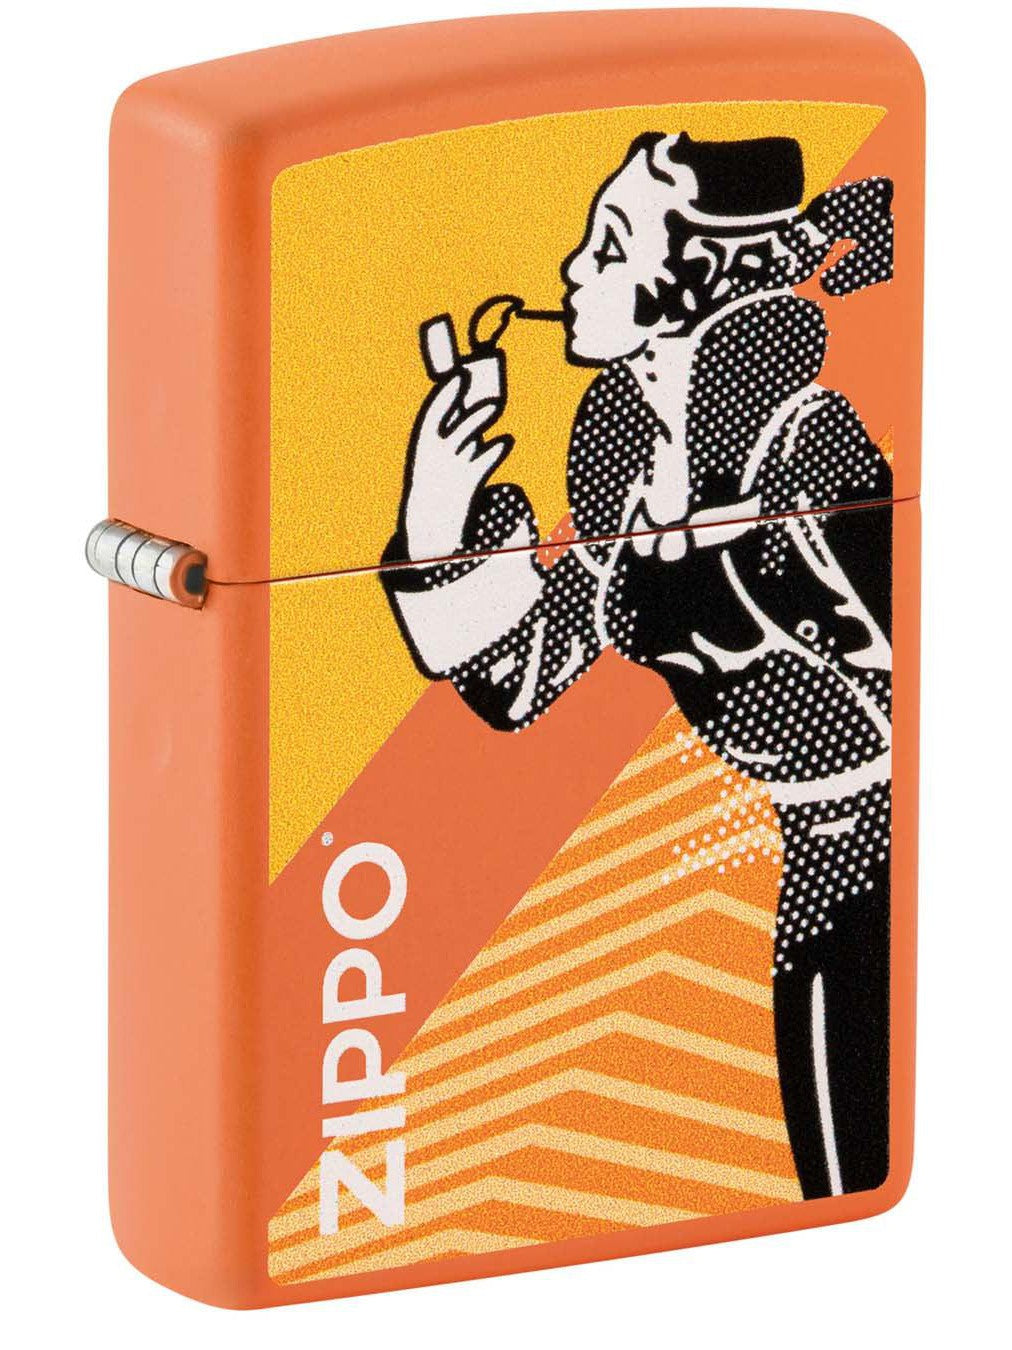 Zippo Lighter: Windy the Zippo Girl - Orange Matte 48468